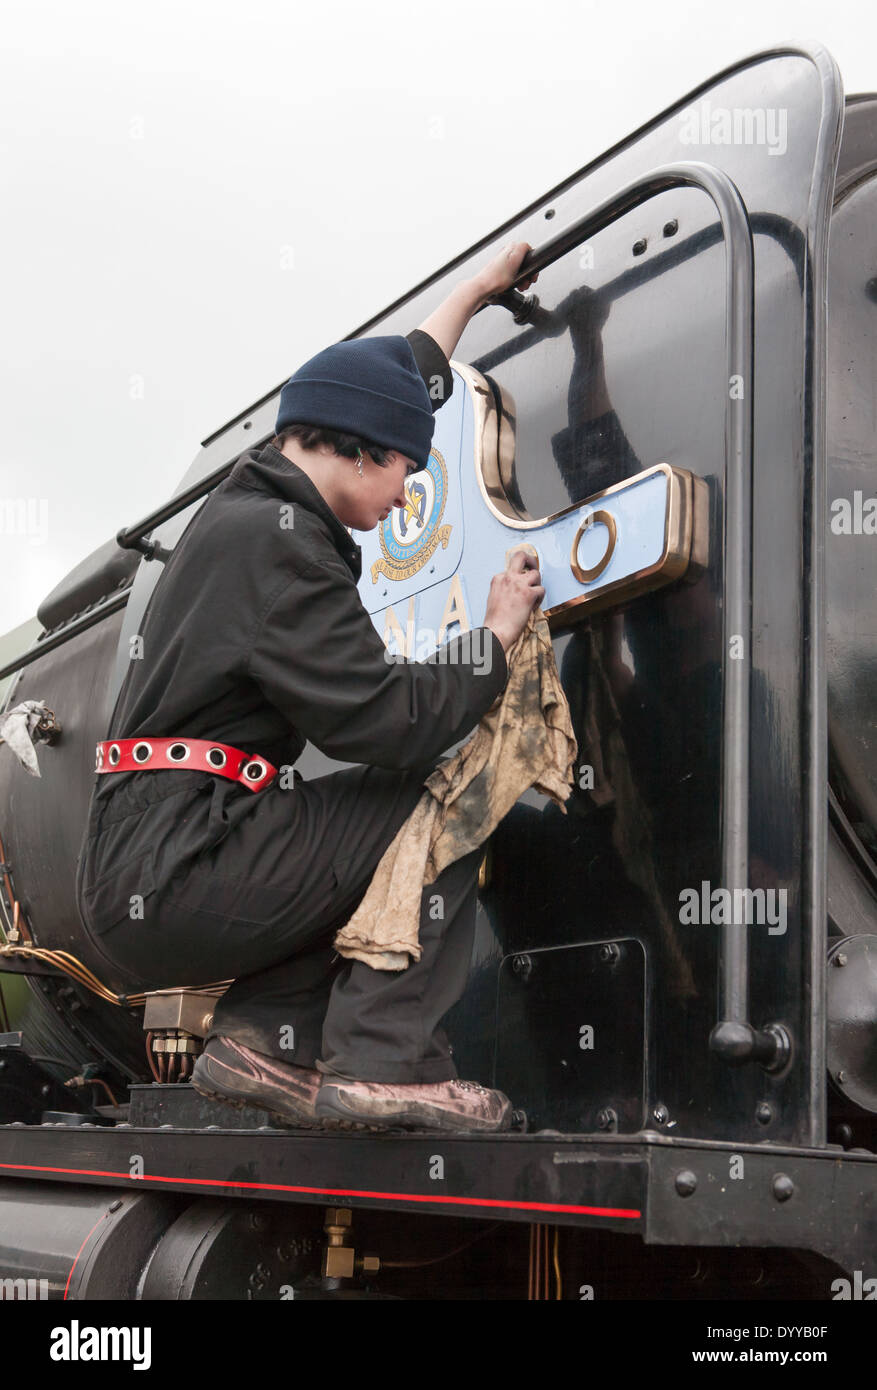 Young woman polishing the nameplate of steam locomotive Tornado, Shildon Co. Durham, England, UK Stock Photo